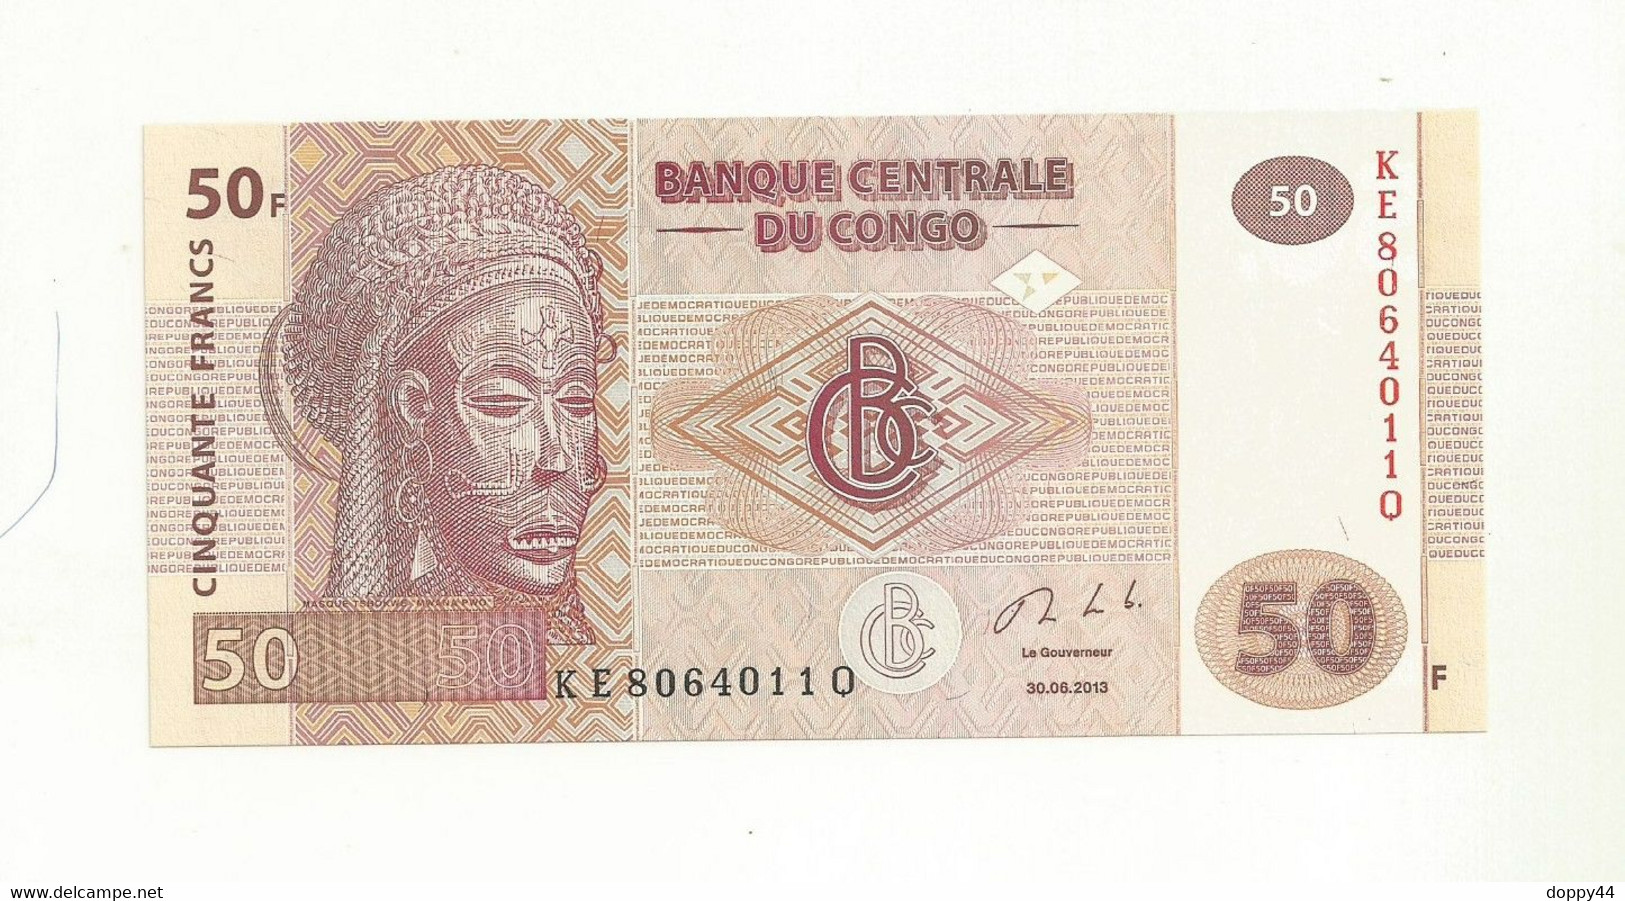 BILLET NEUF BANQUE CENTRALE DU CONGO 50 FRANCS EMIS EN 2013 SUPERBE. - Republic Of Congo (Congo-Brazzaville)